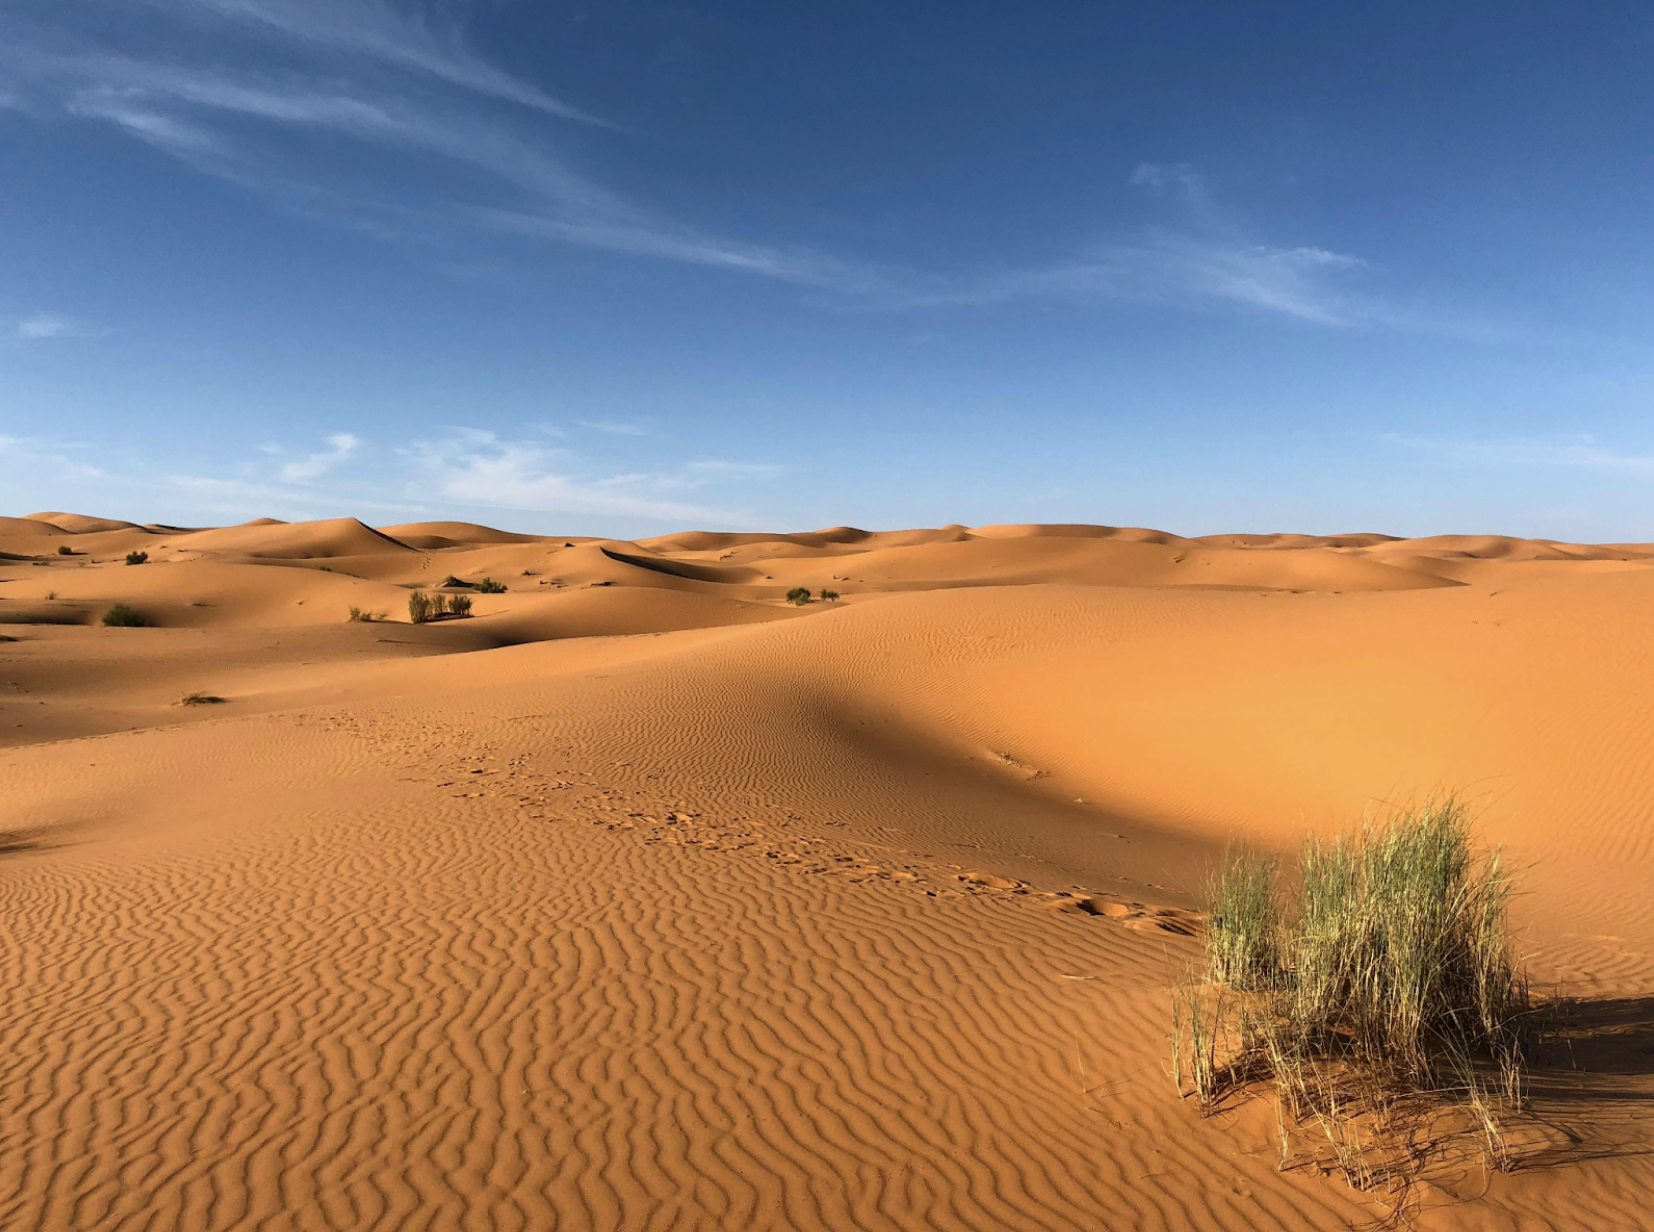 The Sahara Desert. Image by Greg Gulik